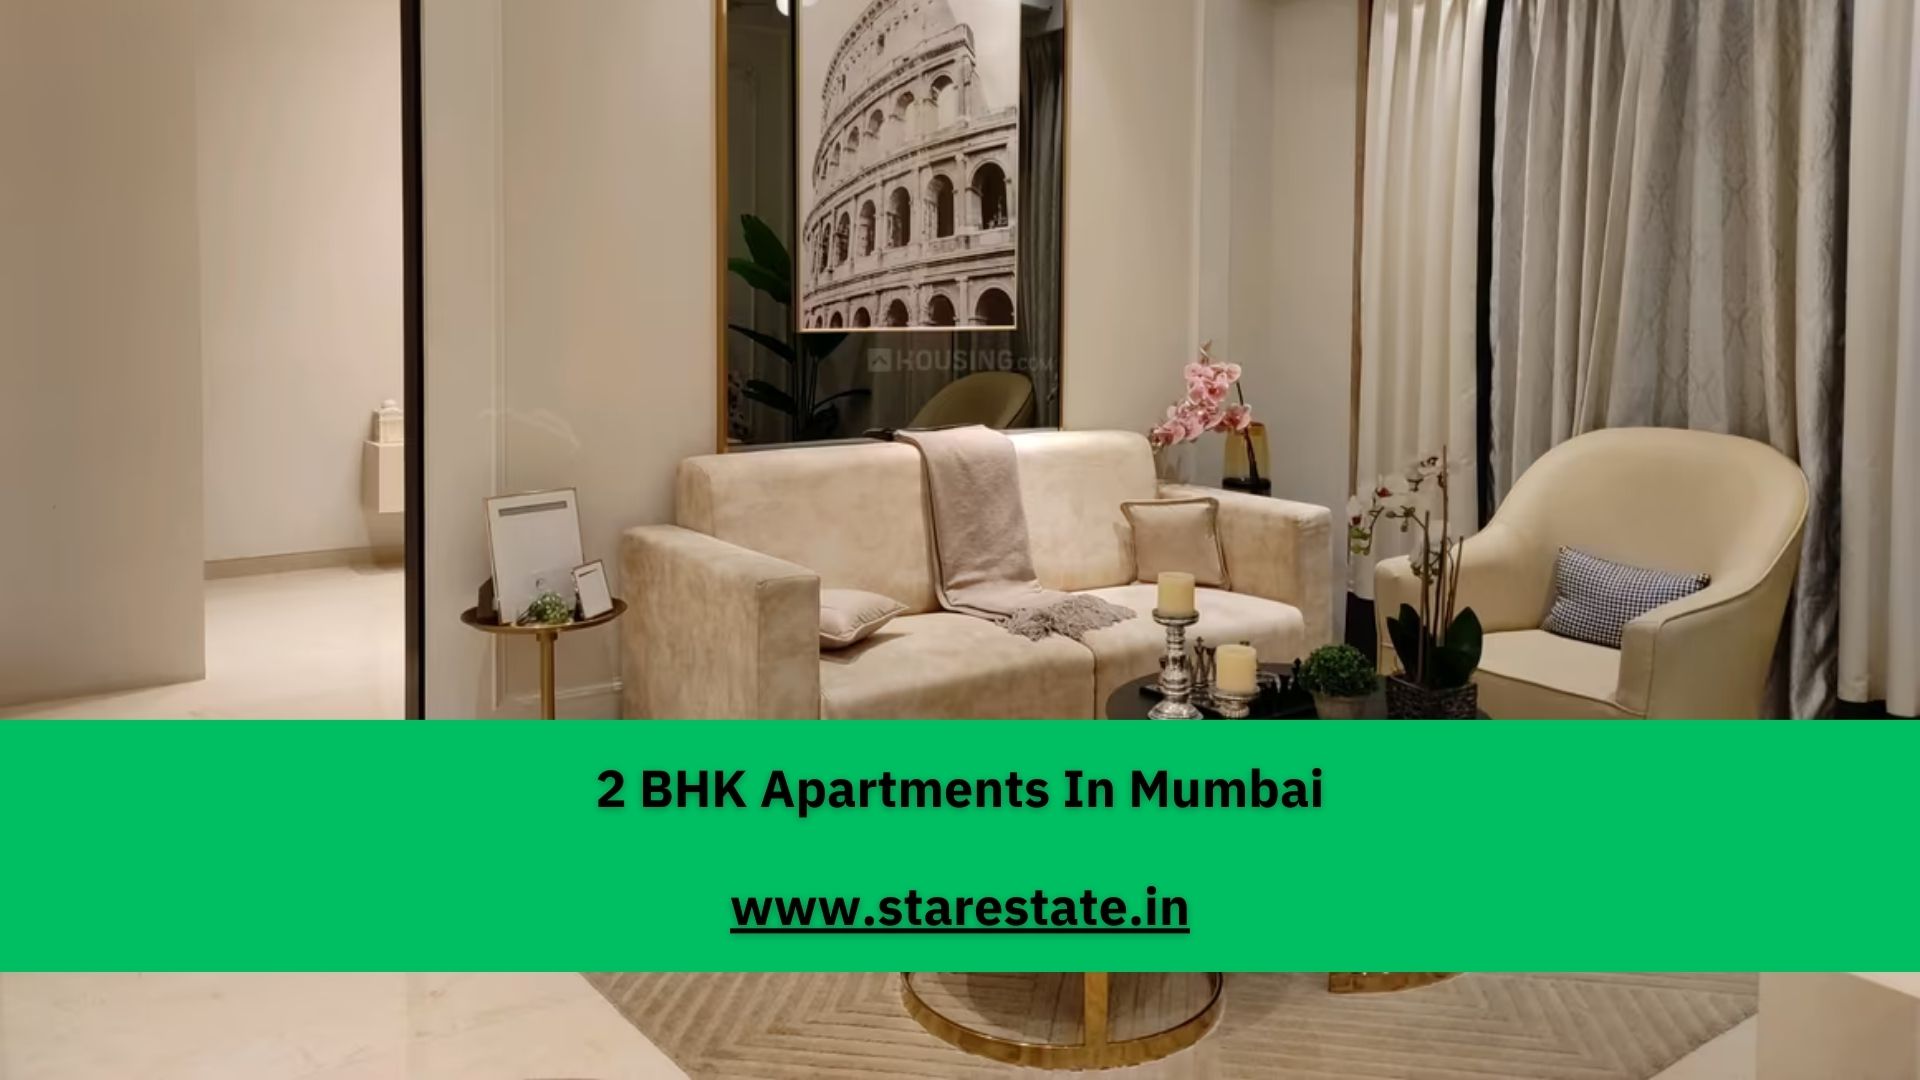 2 BHK Apartments In Mumbai | Location’s & Amenities